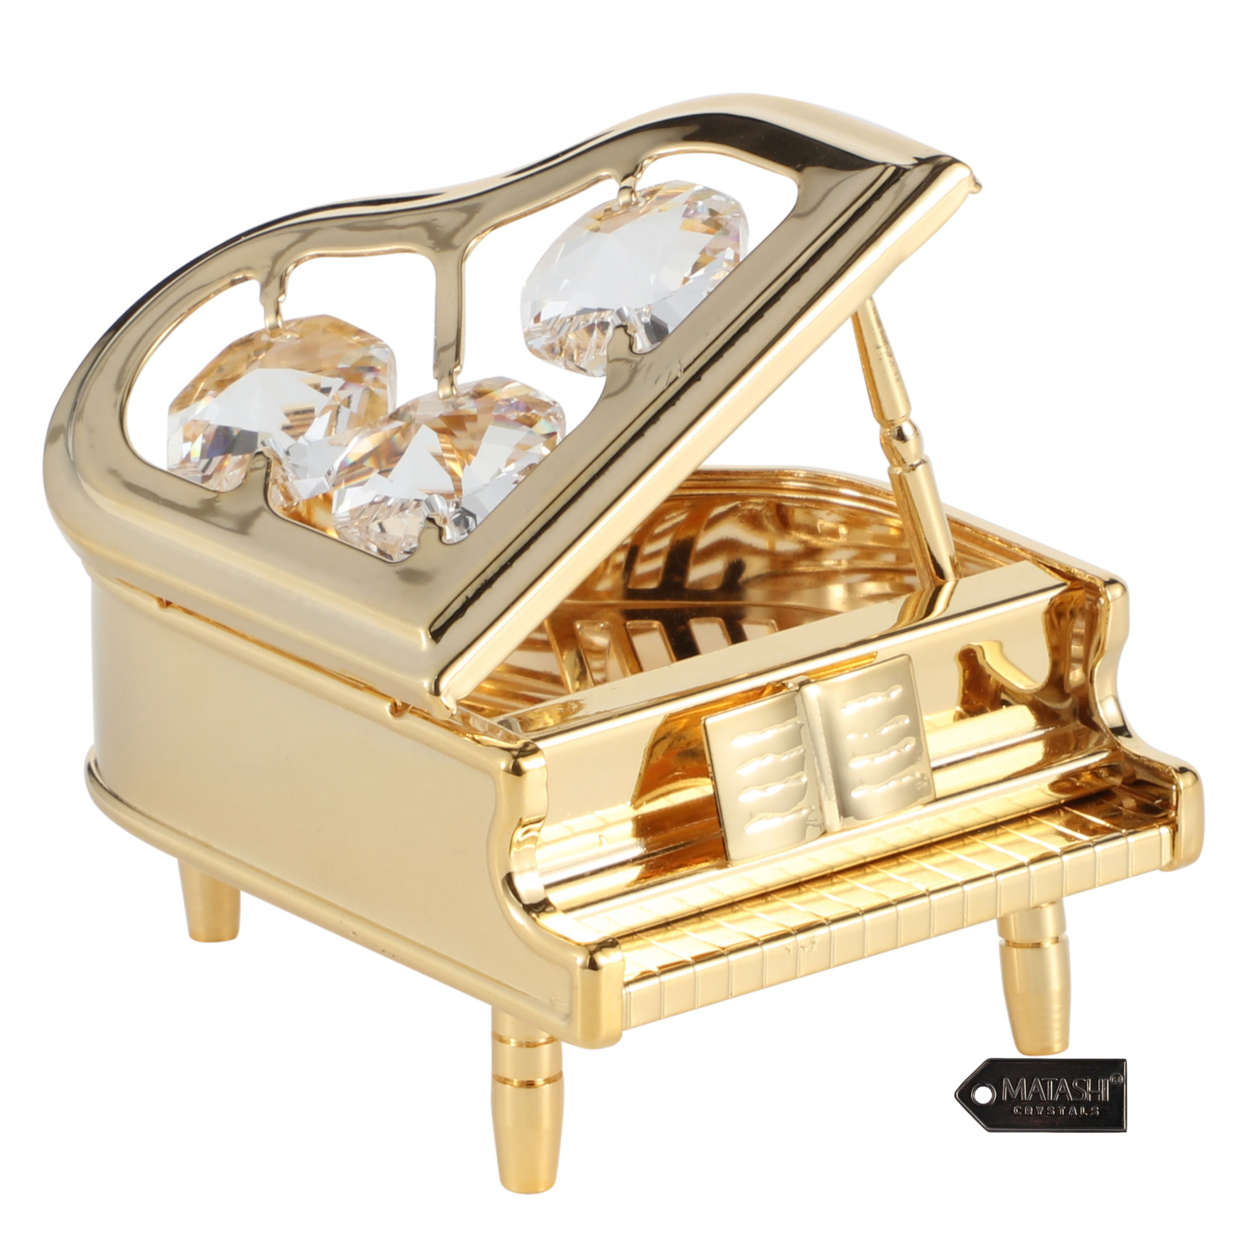 Matashi 24K Gold Plated Crystal Studded Grand Piano Ornament Holiday Decor Gift For Christmas Mother's Day Birthday Anniversary